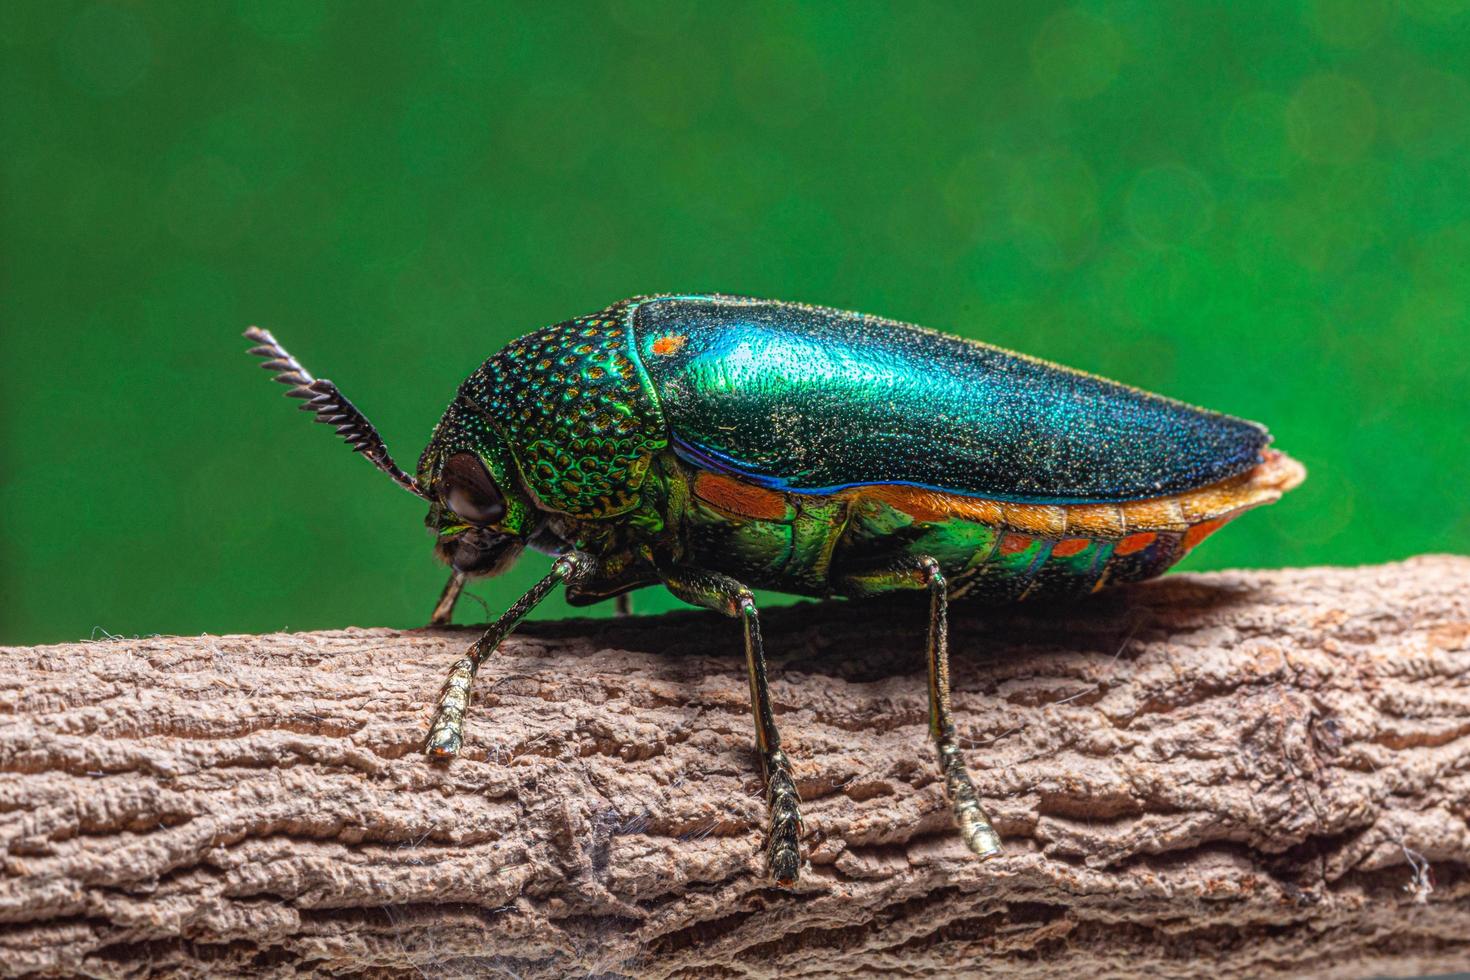 Insecte buprestidae sur fond vert photo